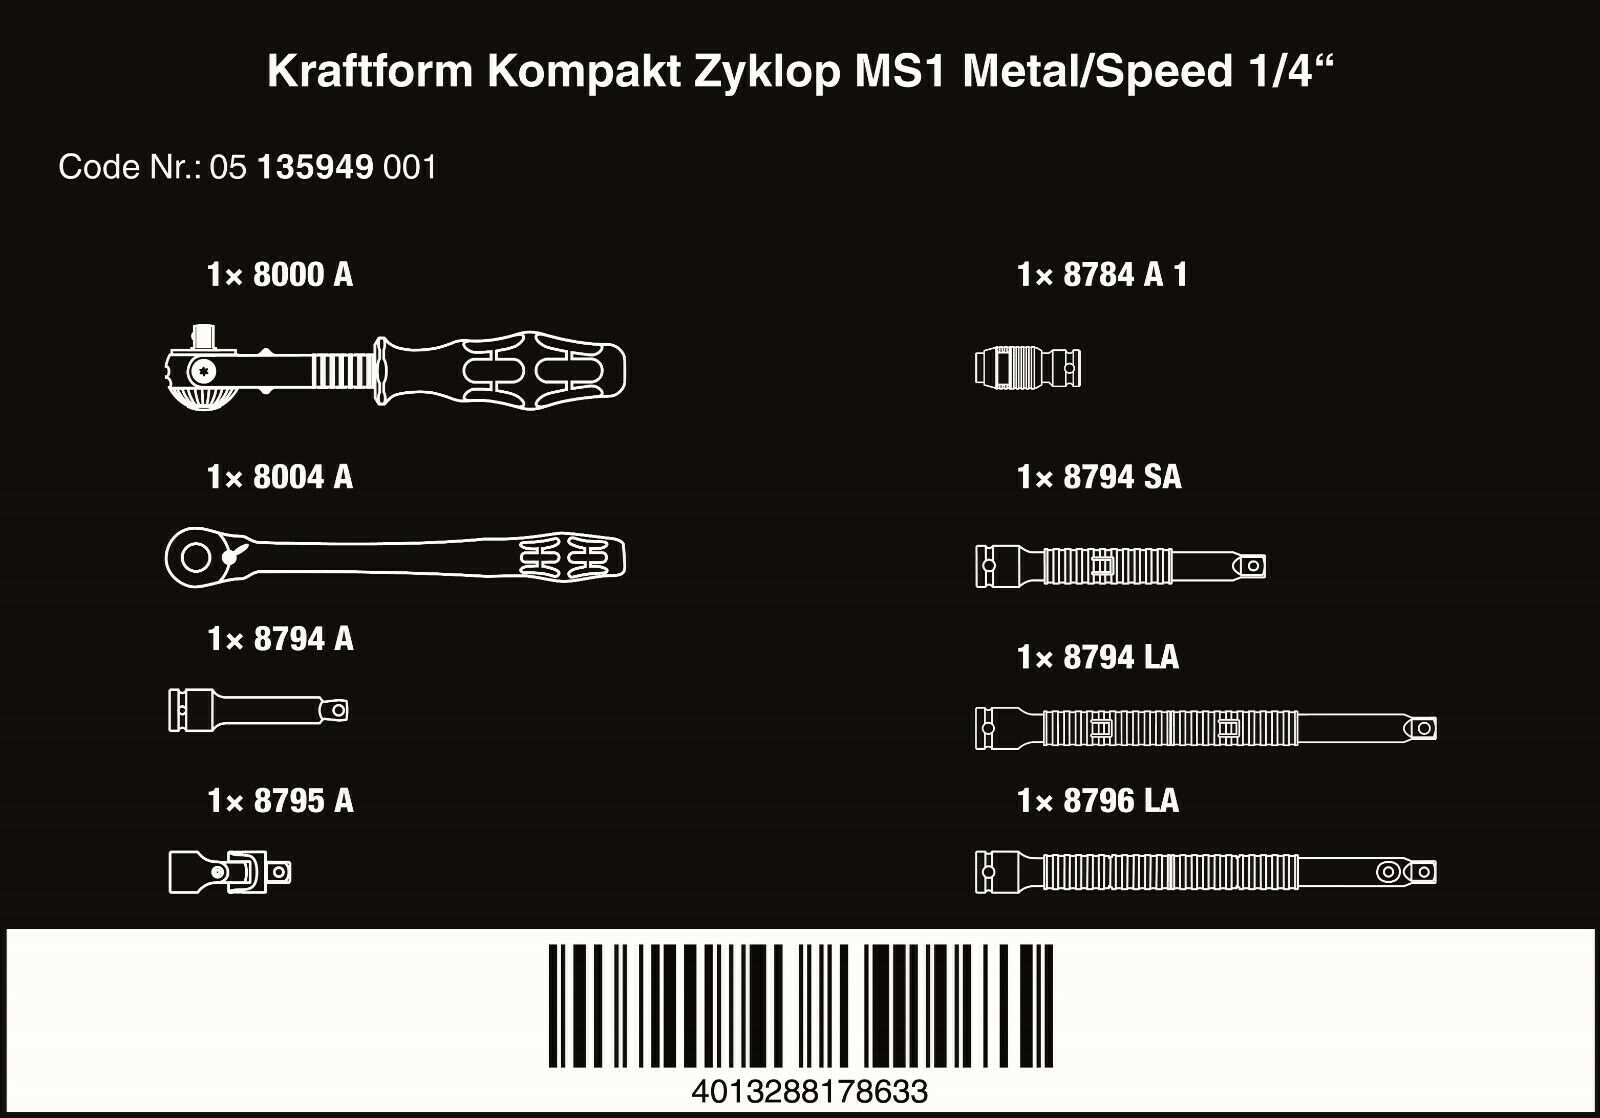 wera kraftform kompakt zyklop ms1 metal speed socket wrench set 1/4" 05135949001